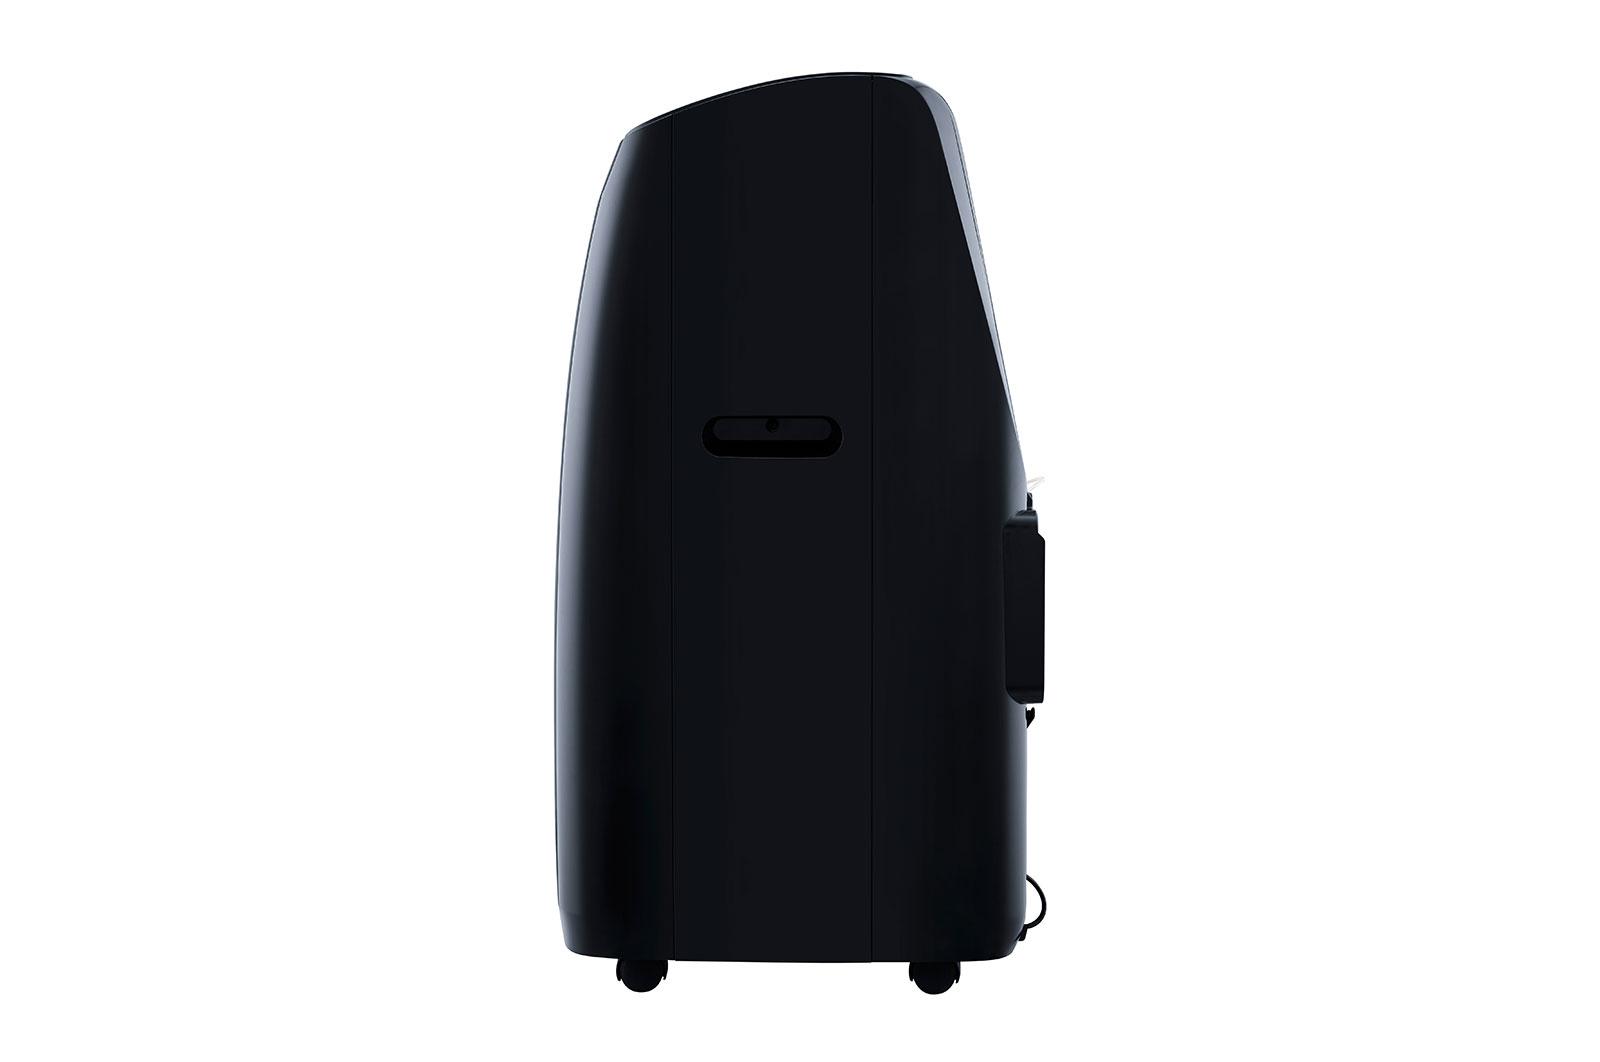 Lg LP1021BSSM 10,000 Btu Smart Wi-Fi Portable Air Conditioner